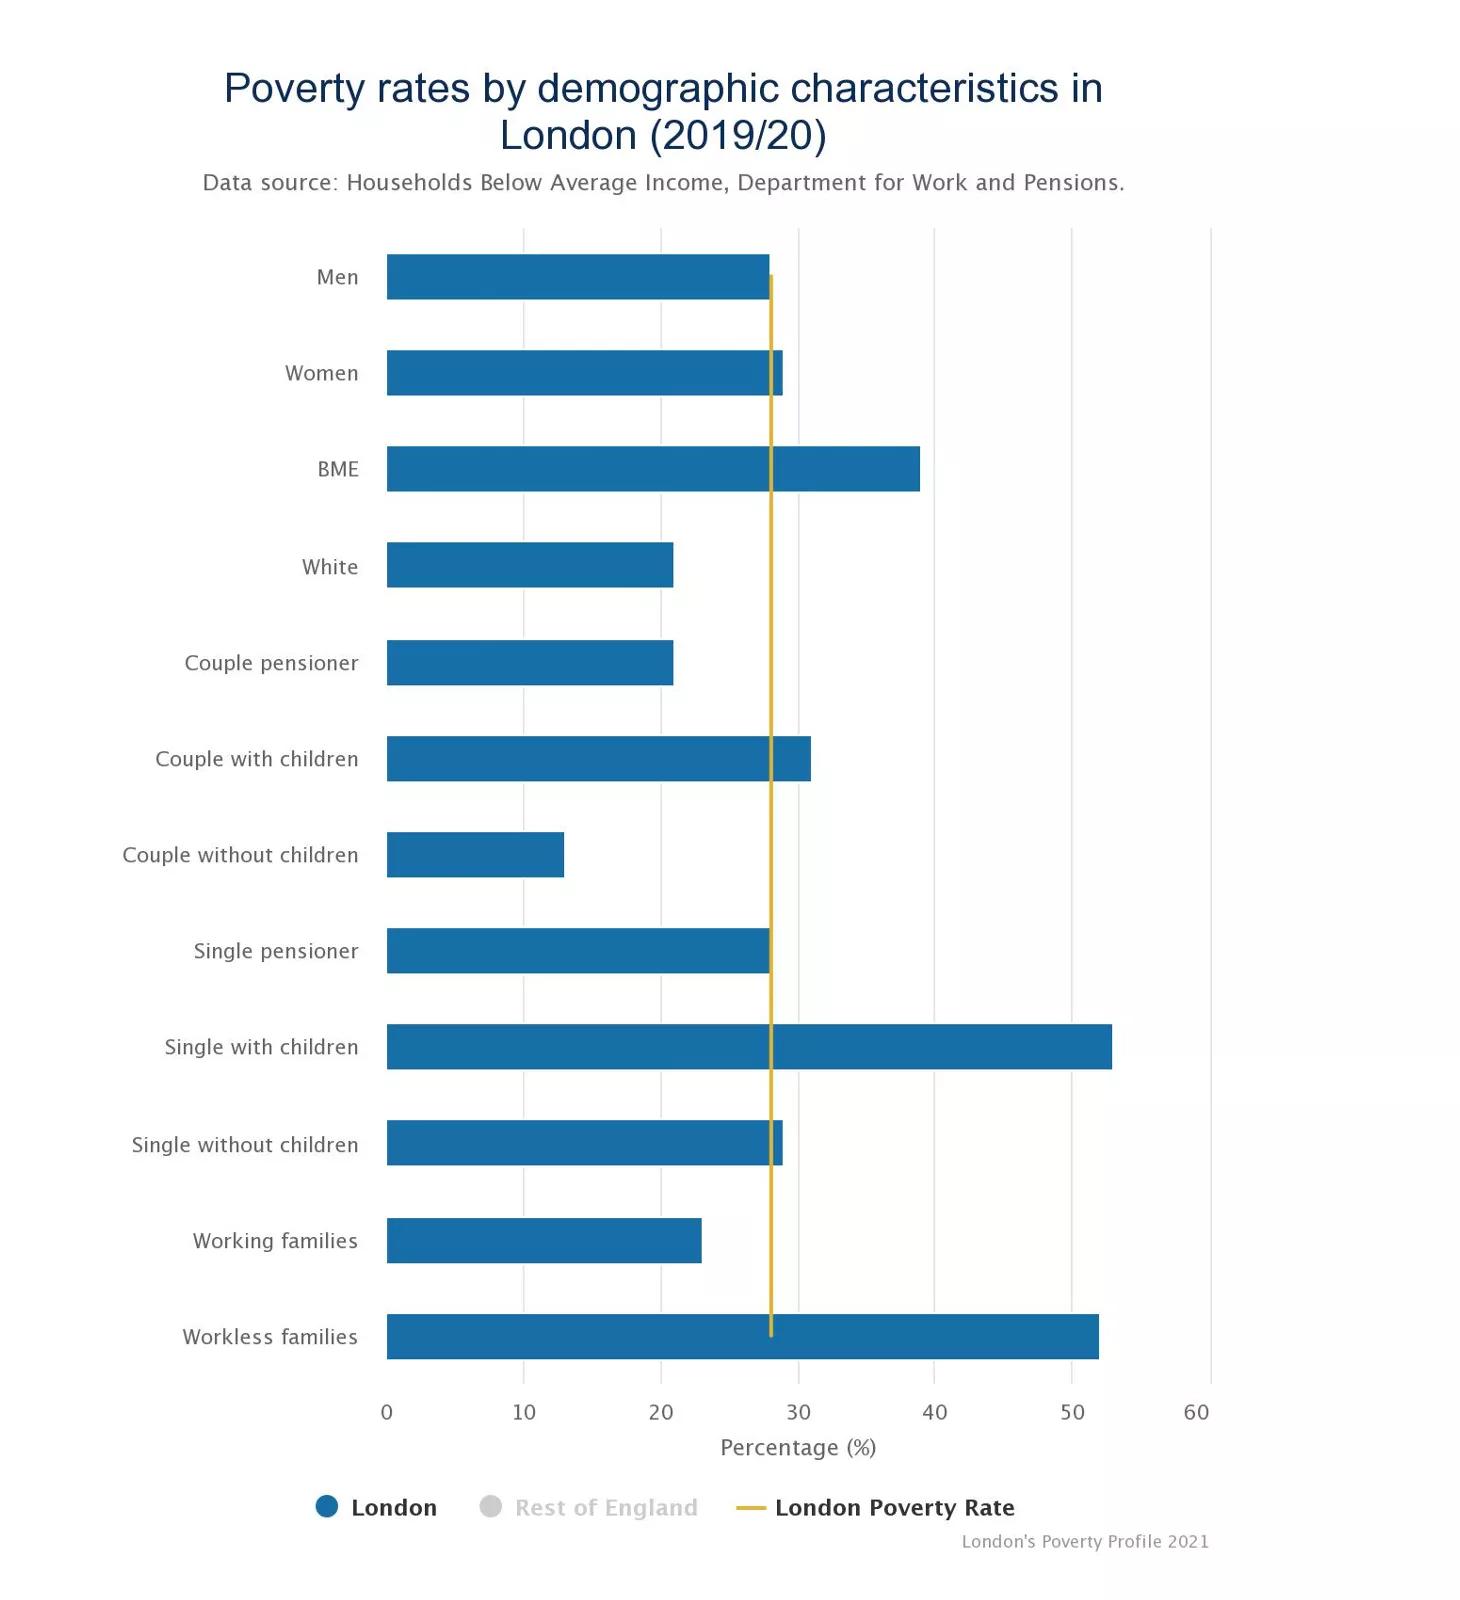 Source: London's Poverty Profile 2021